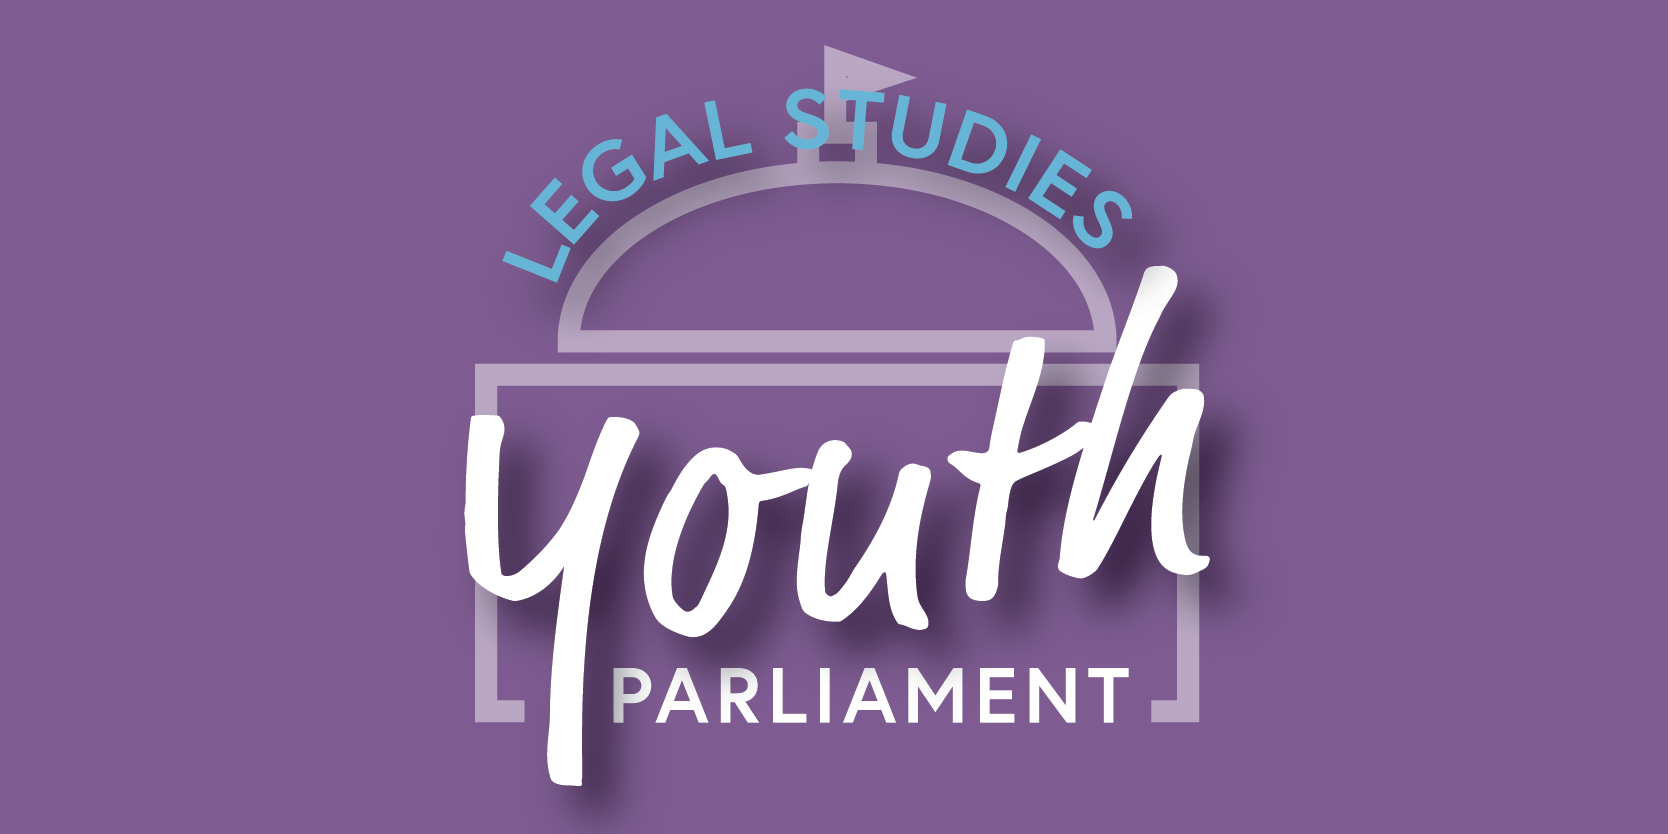 Legal Studies Youth Parliament logo